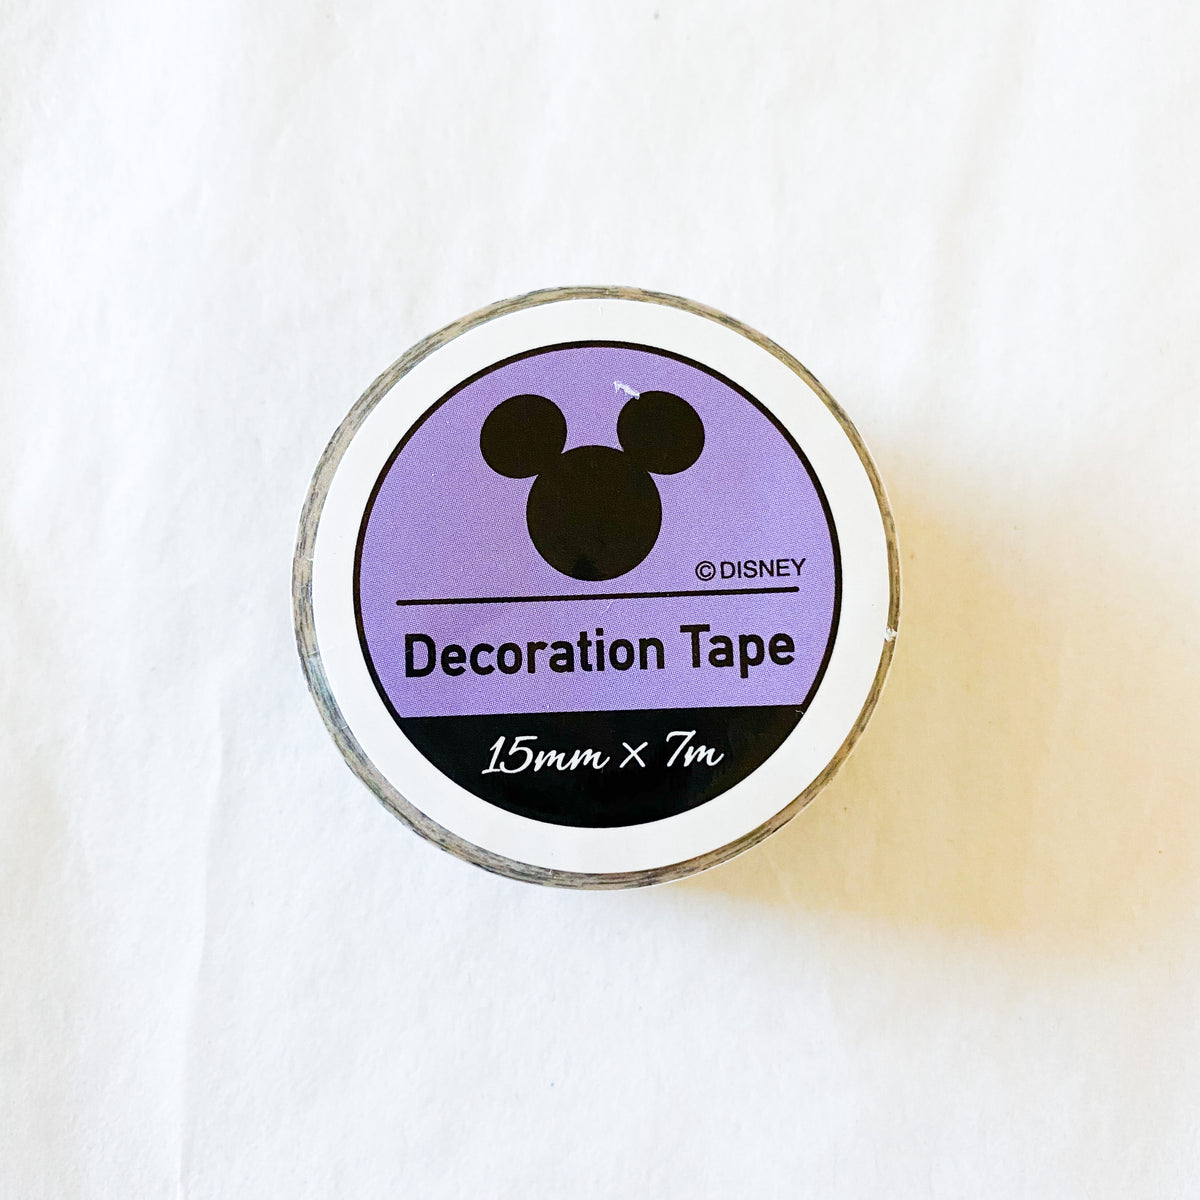 Disney Mickey & Minnie Mouse Washi Tape